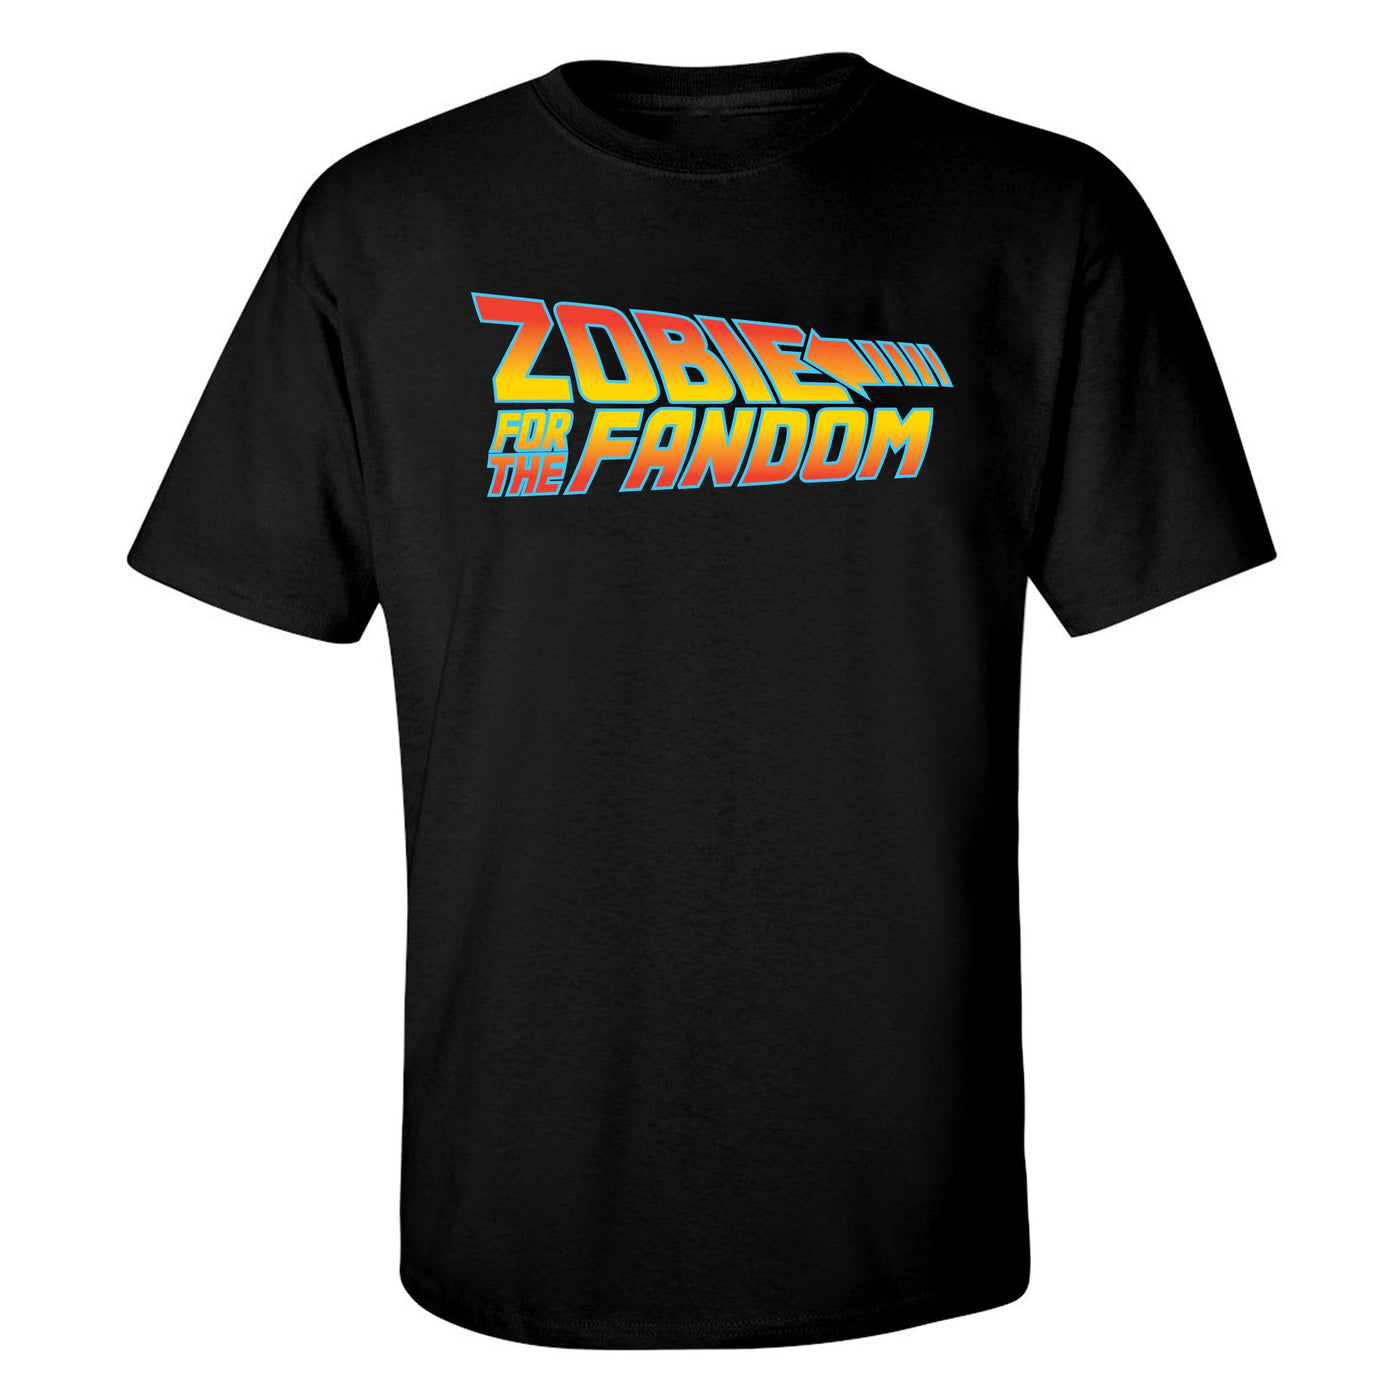 "Back to the Fandom" Short Sleeve T-Shirt